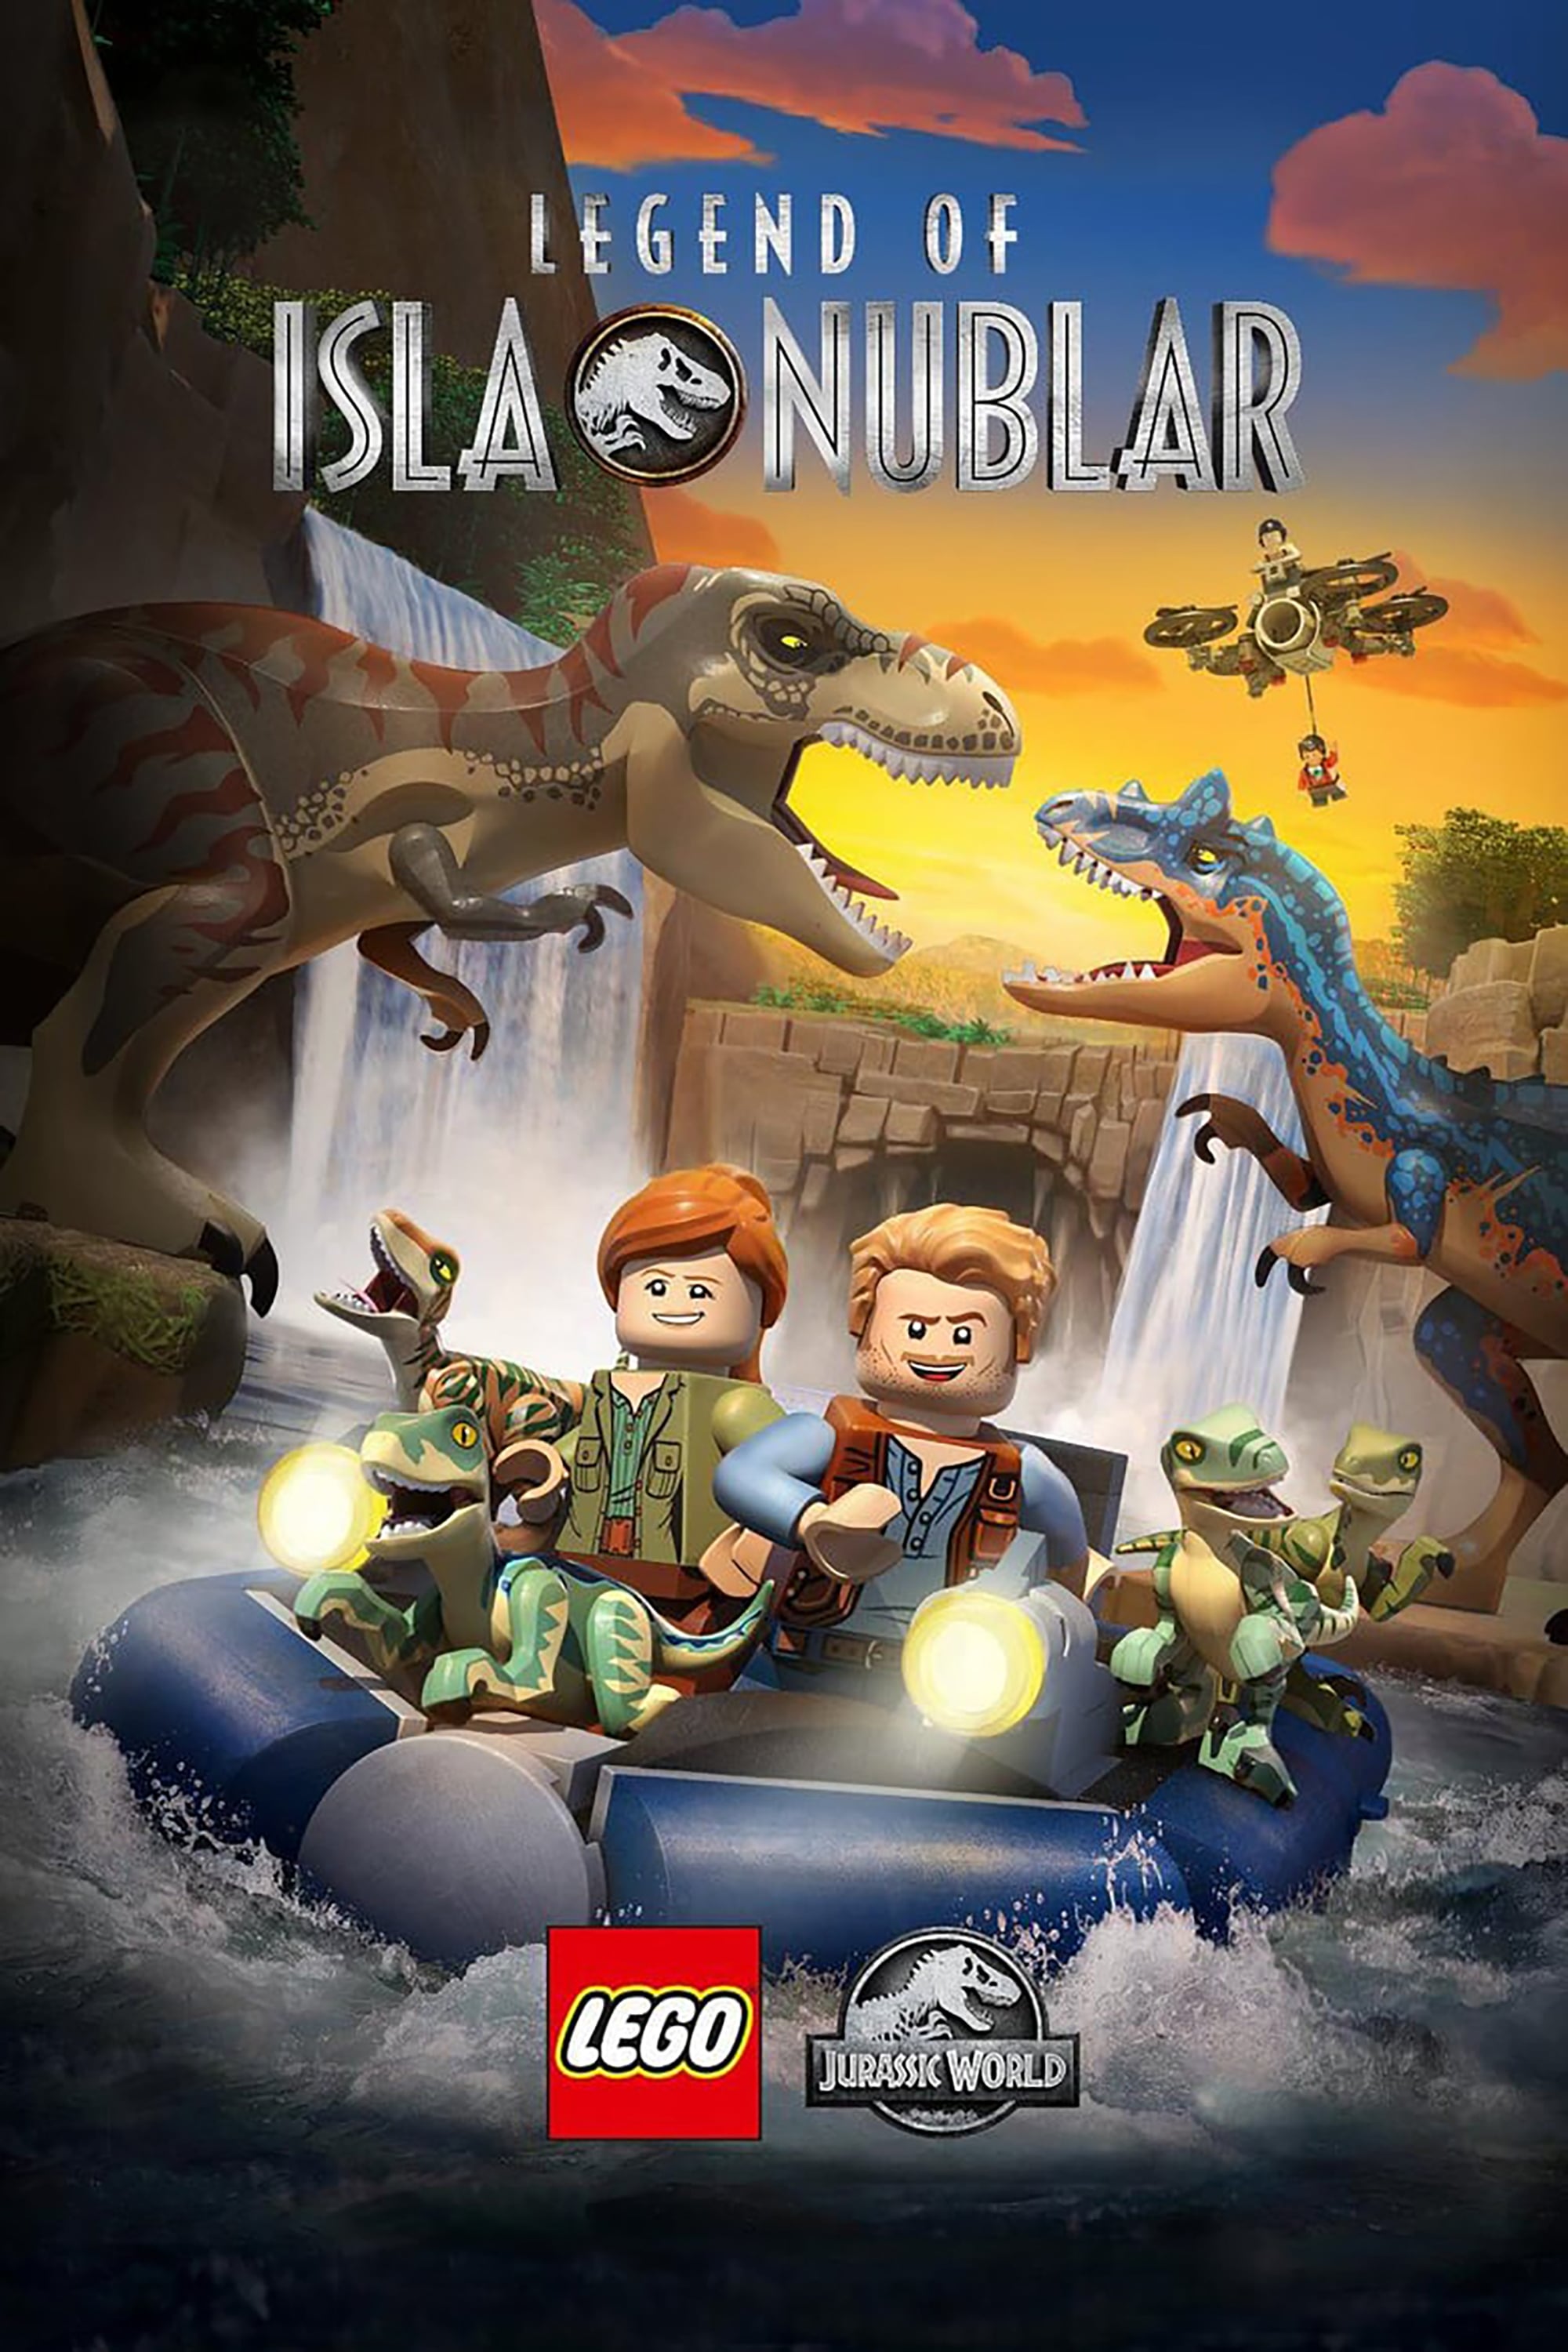 LEGO Jurassic World: Legend of Isla Nublar (2019)